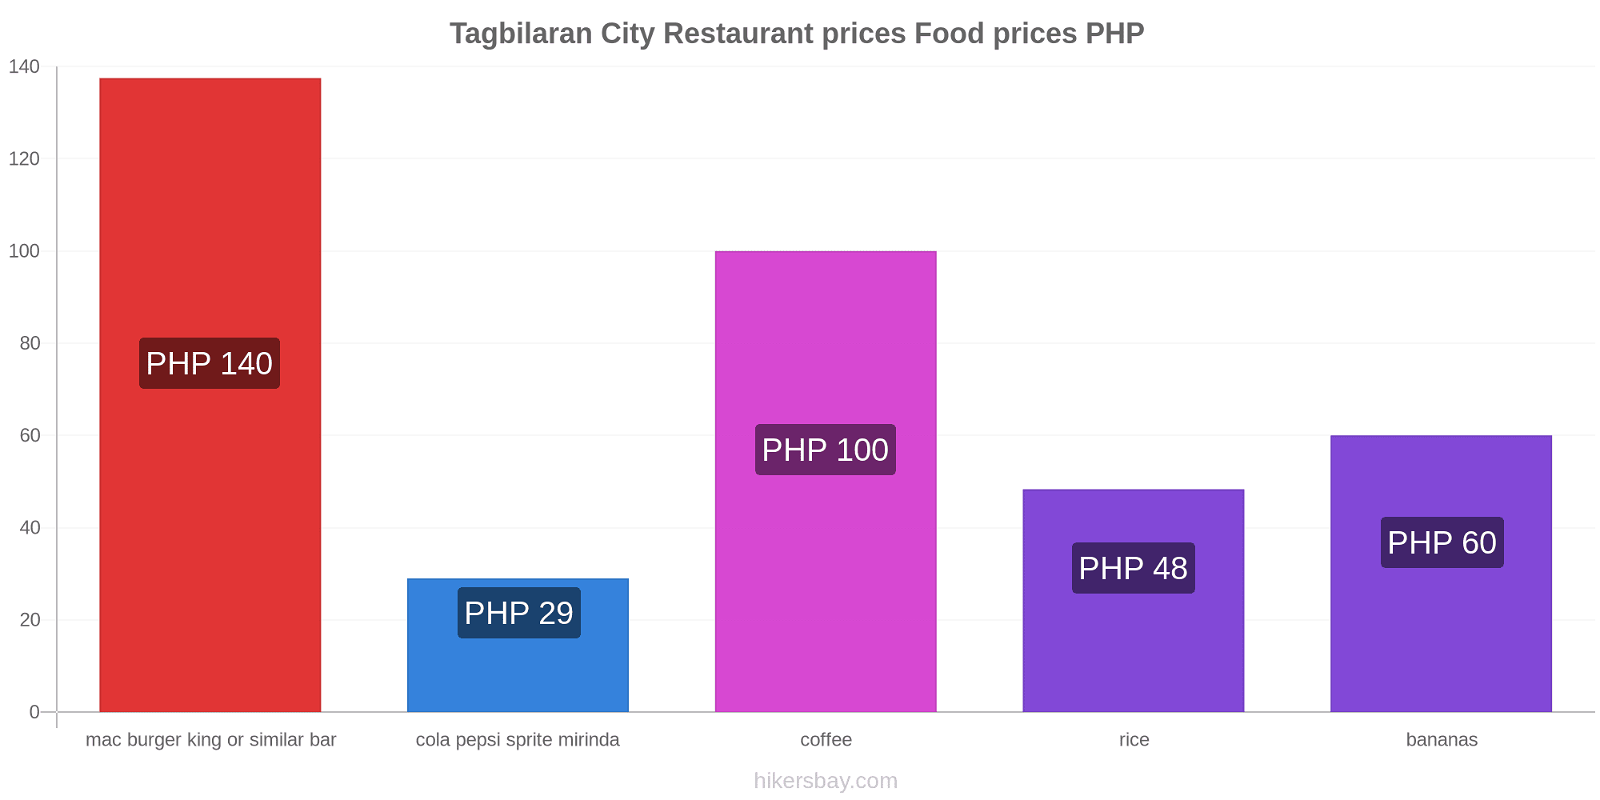 Tagbilaran City price changes hikersbay.com